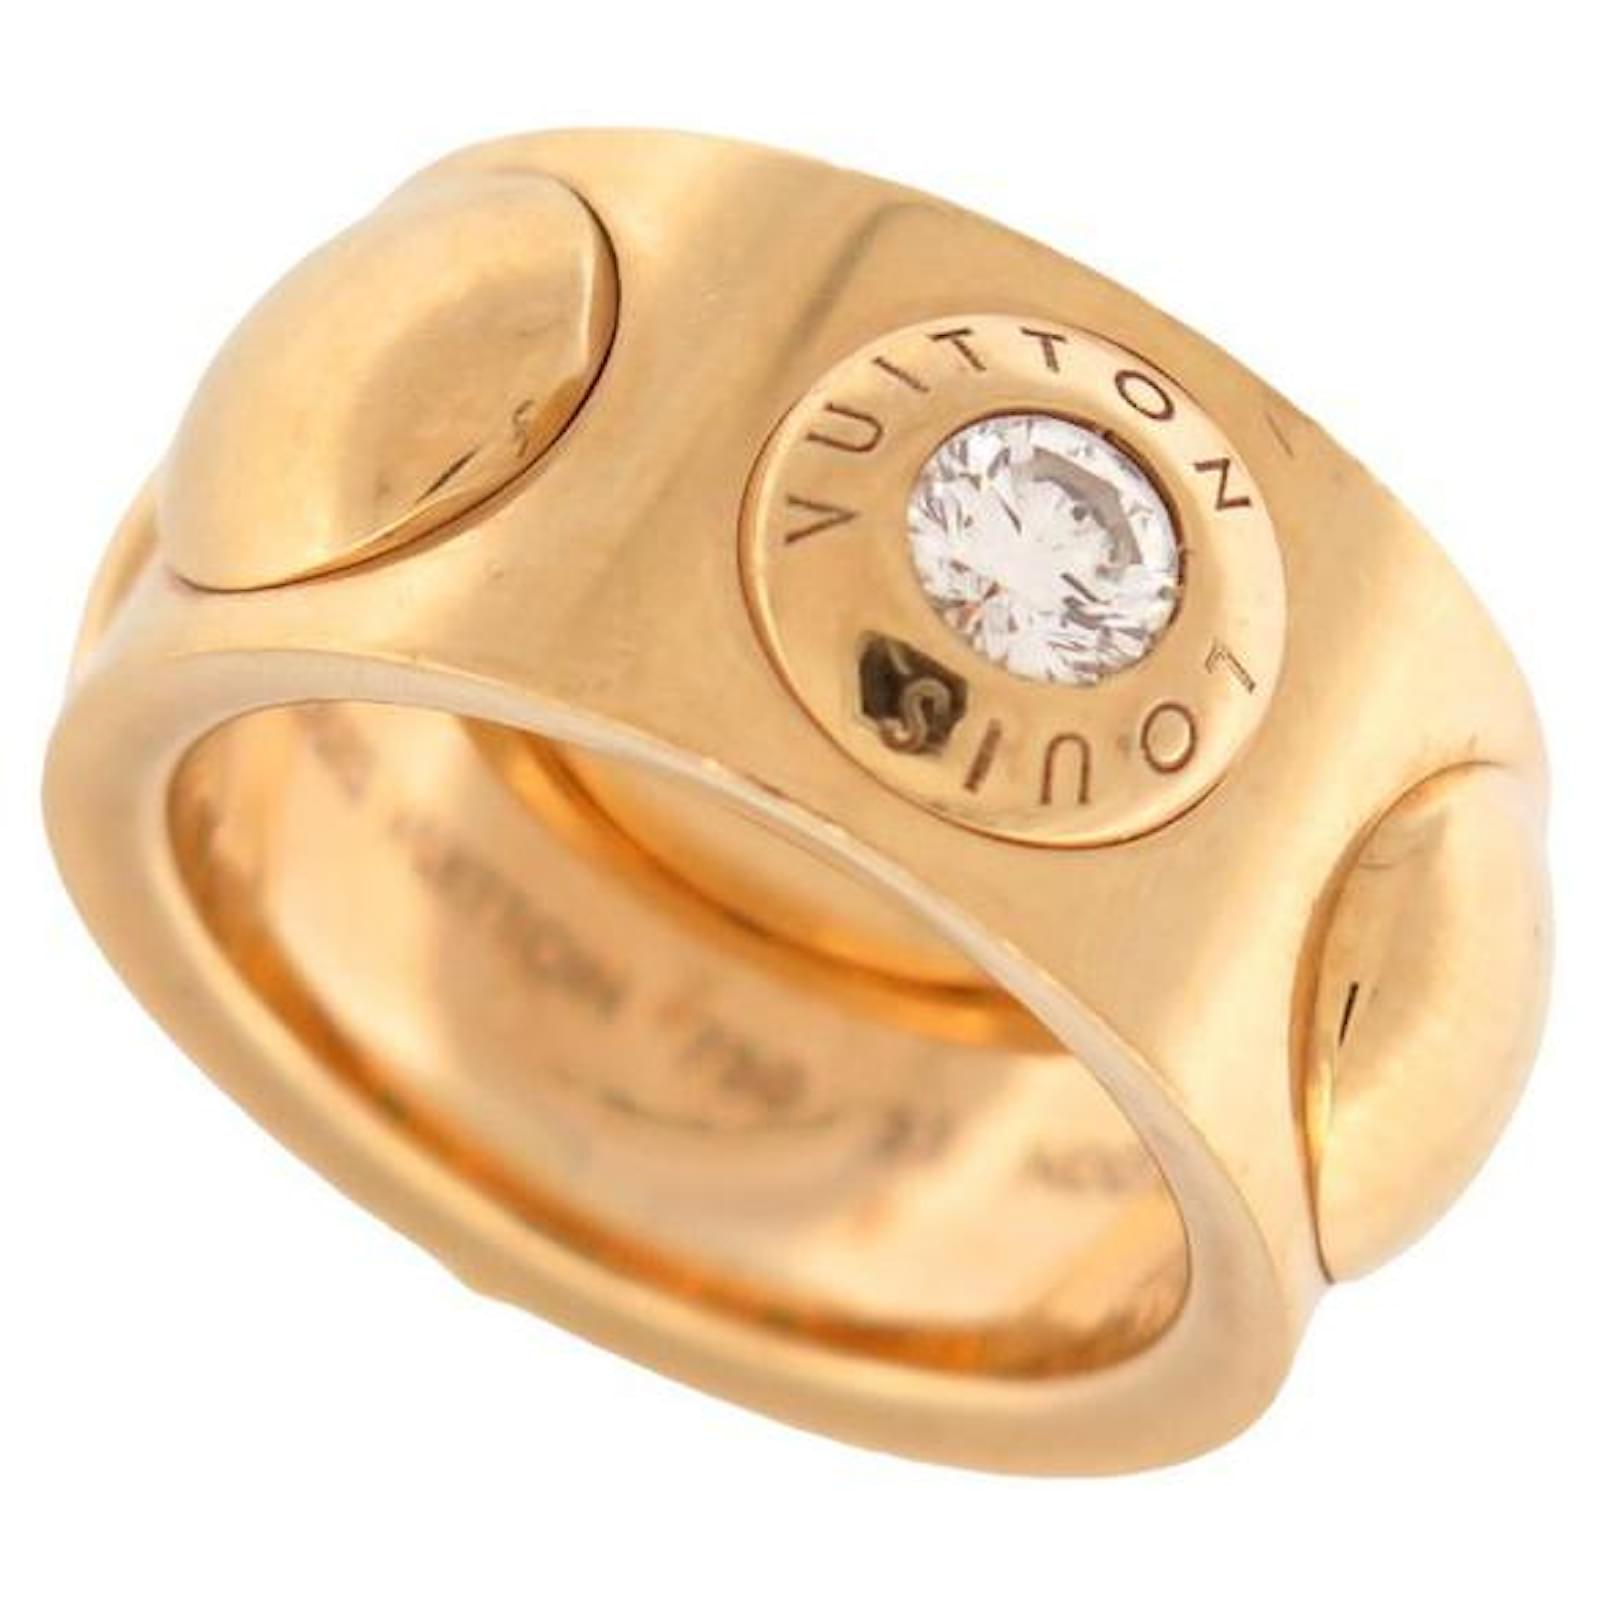 Louis Vuitton Empreinte Ring, Yellow Gold and Diamonds Gold. Size 53